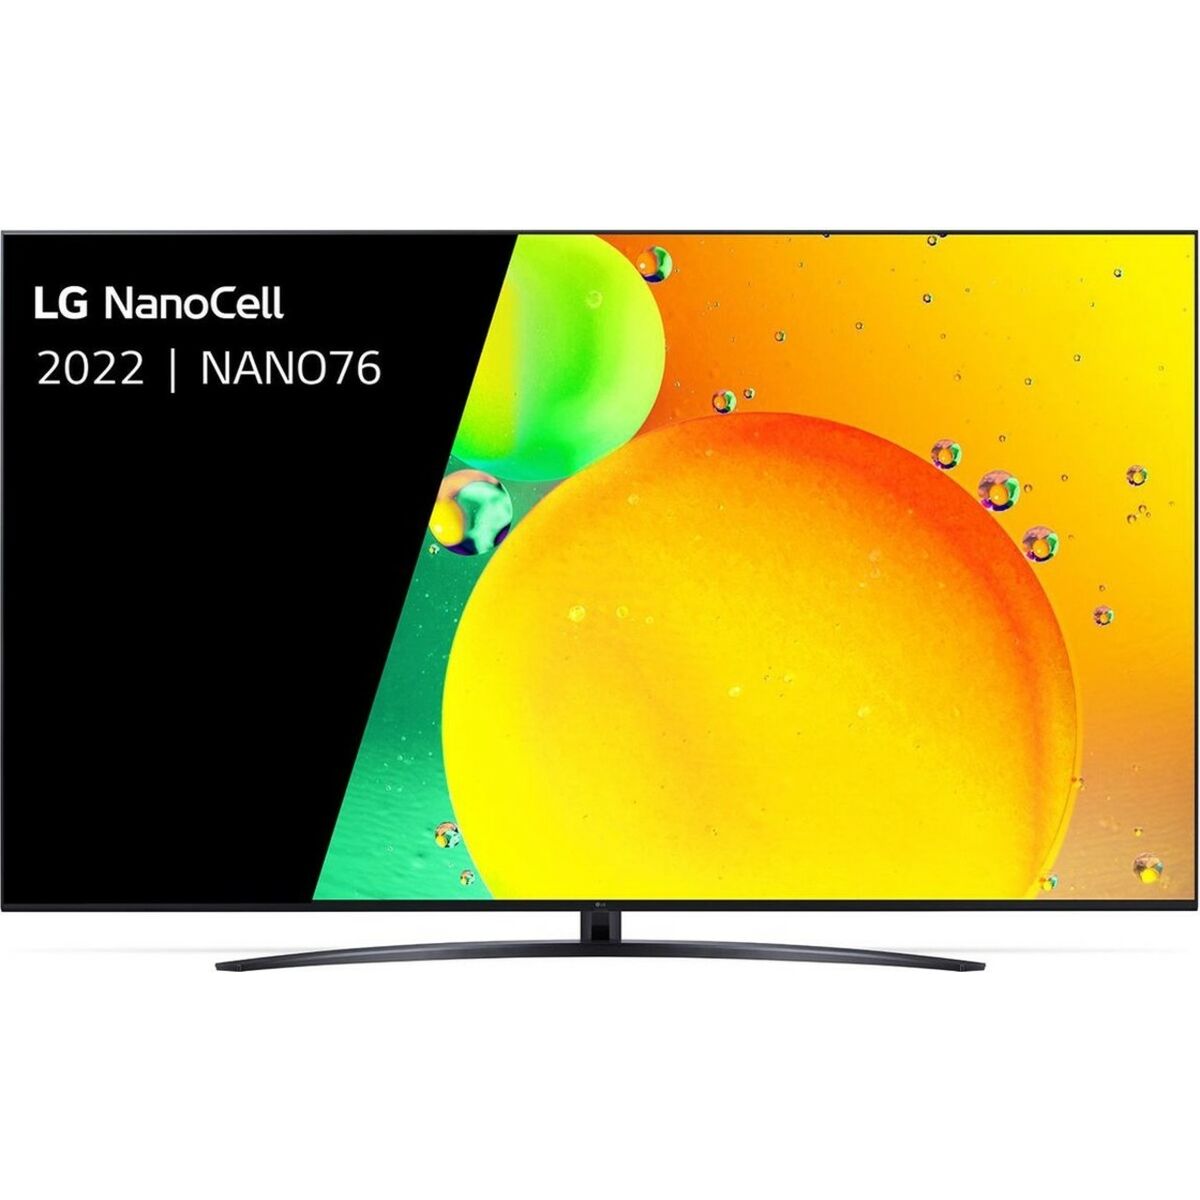 LG 28TQ515S-WZ Blanco Televisor Smart TV 28 Direct LED HD